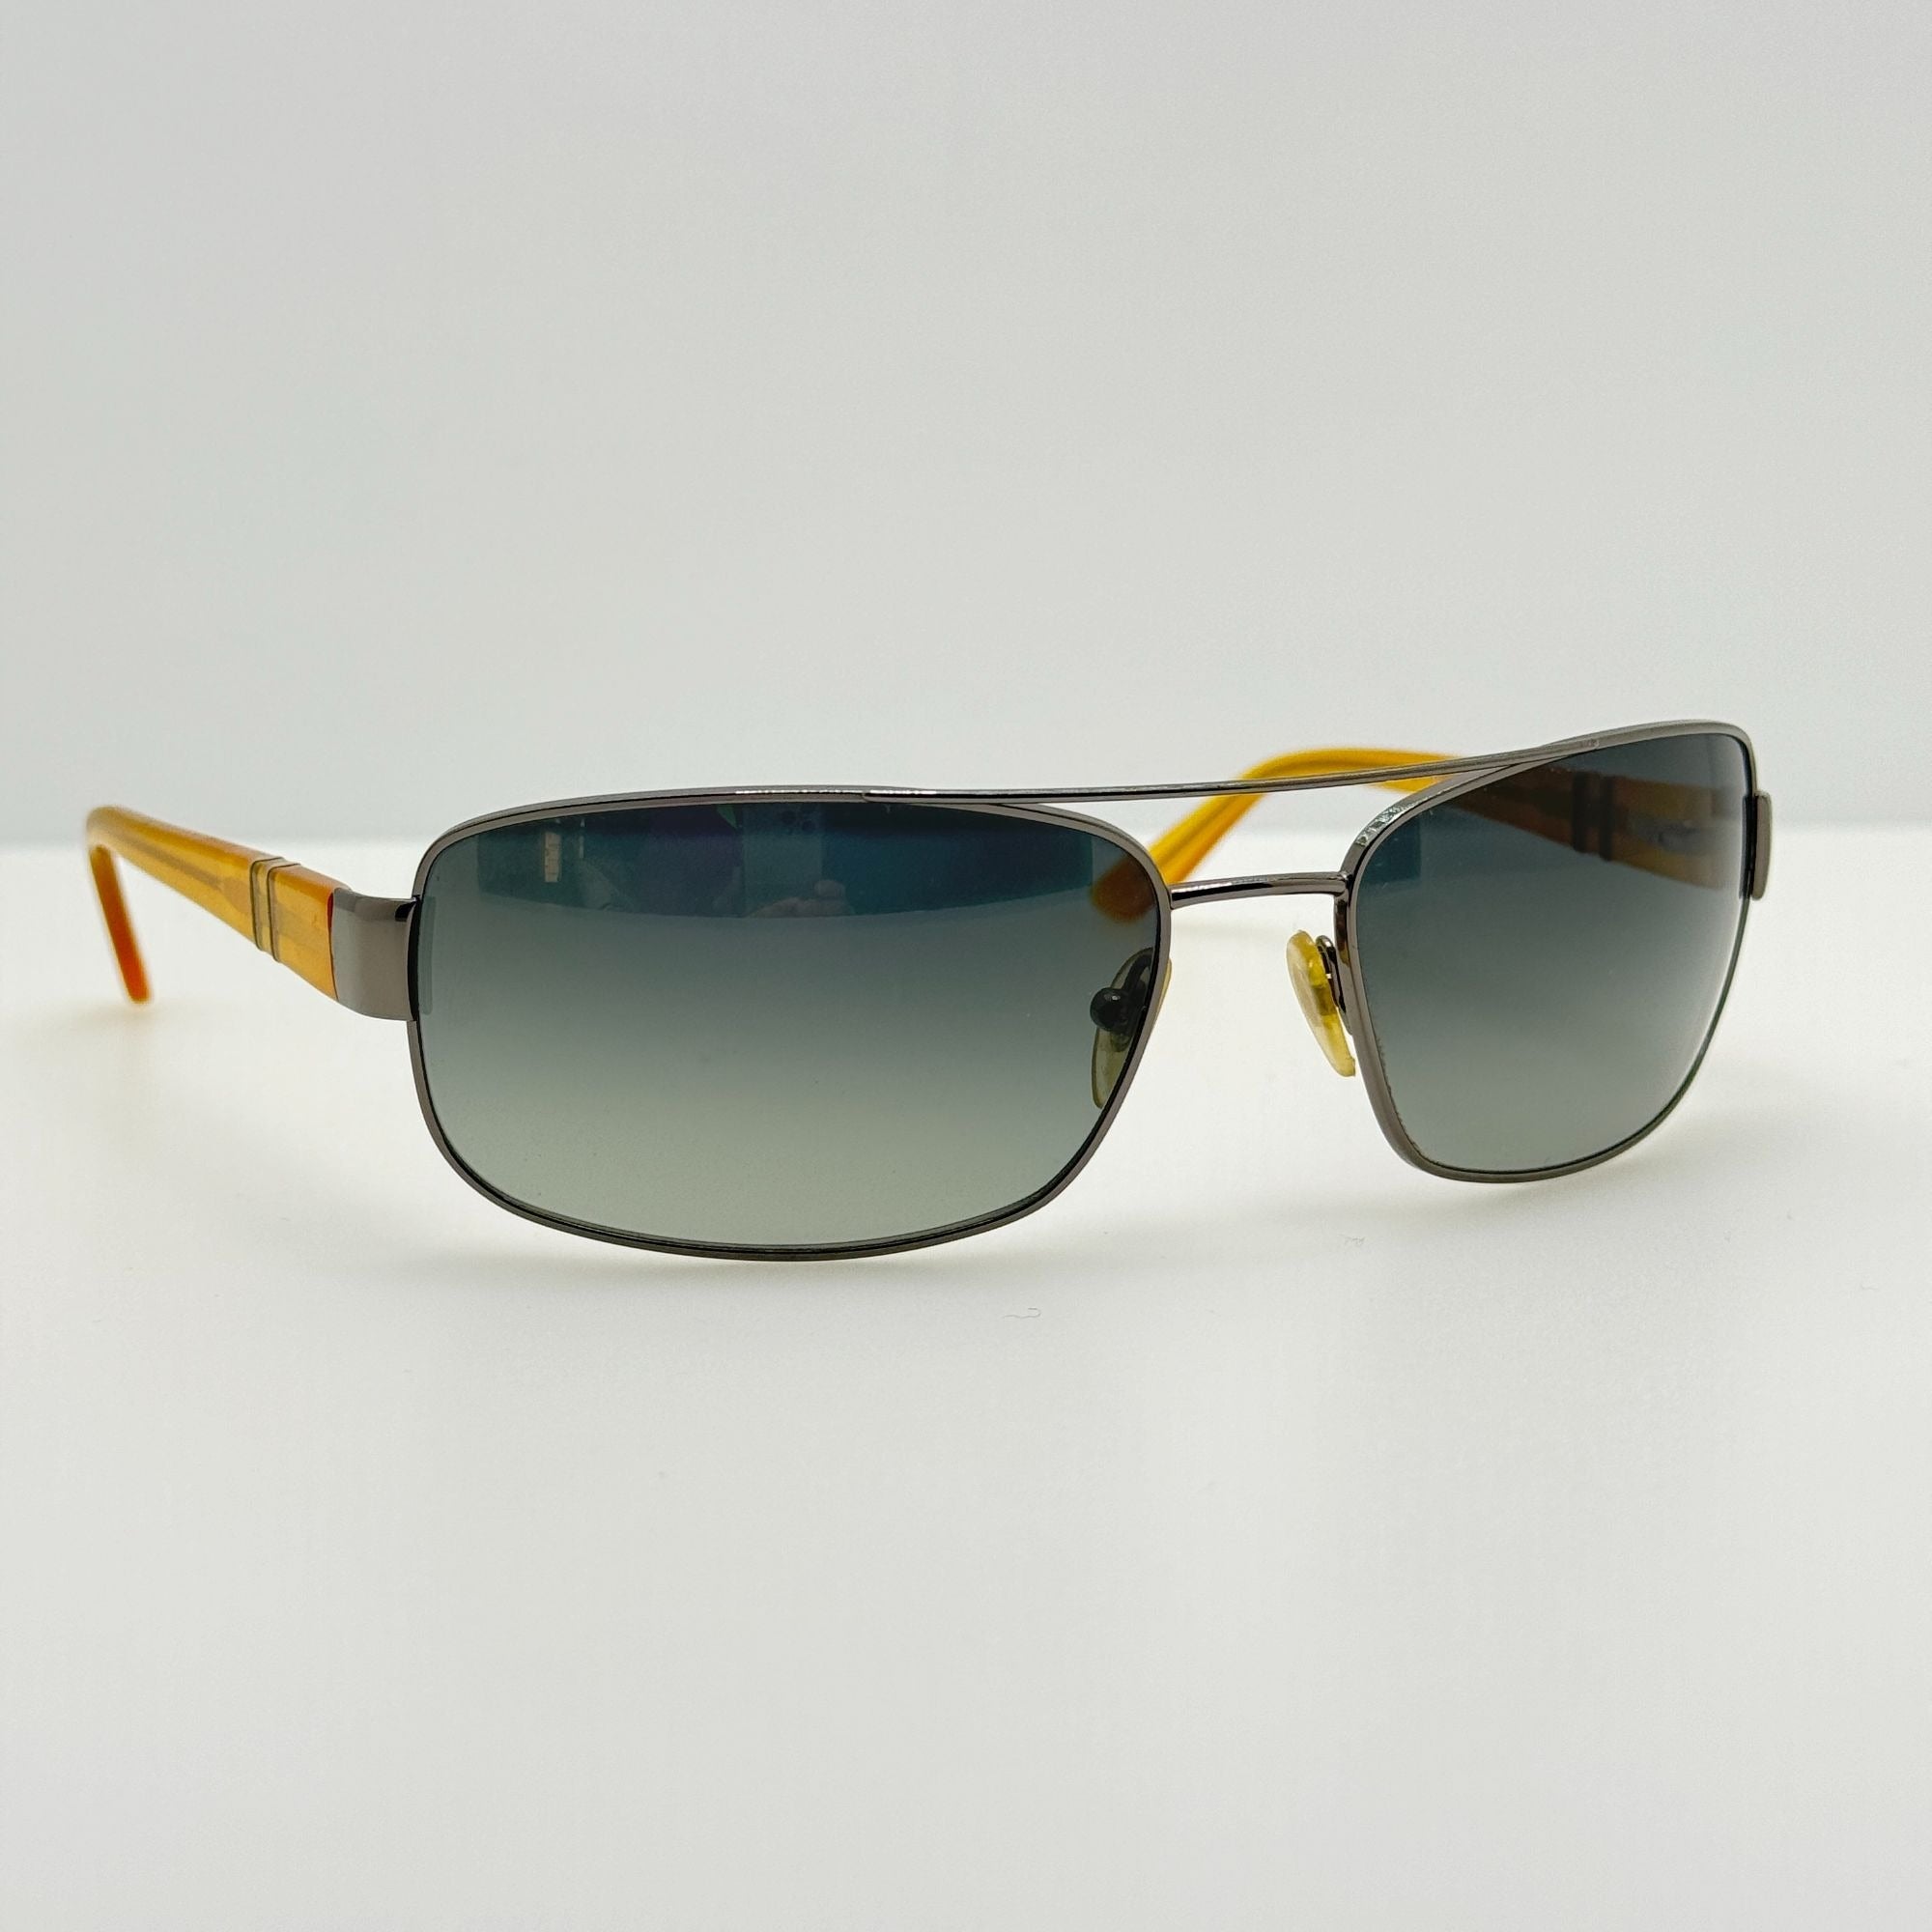 Persol-Sunglasses-2279-S-513/X1-James-Bond-007-61-17-130-Sunglasses